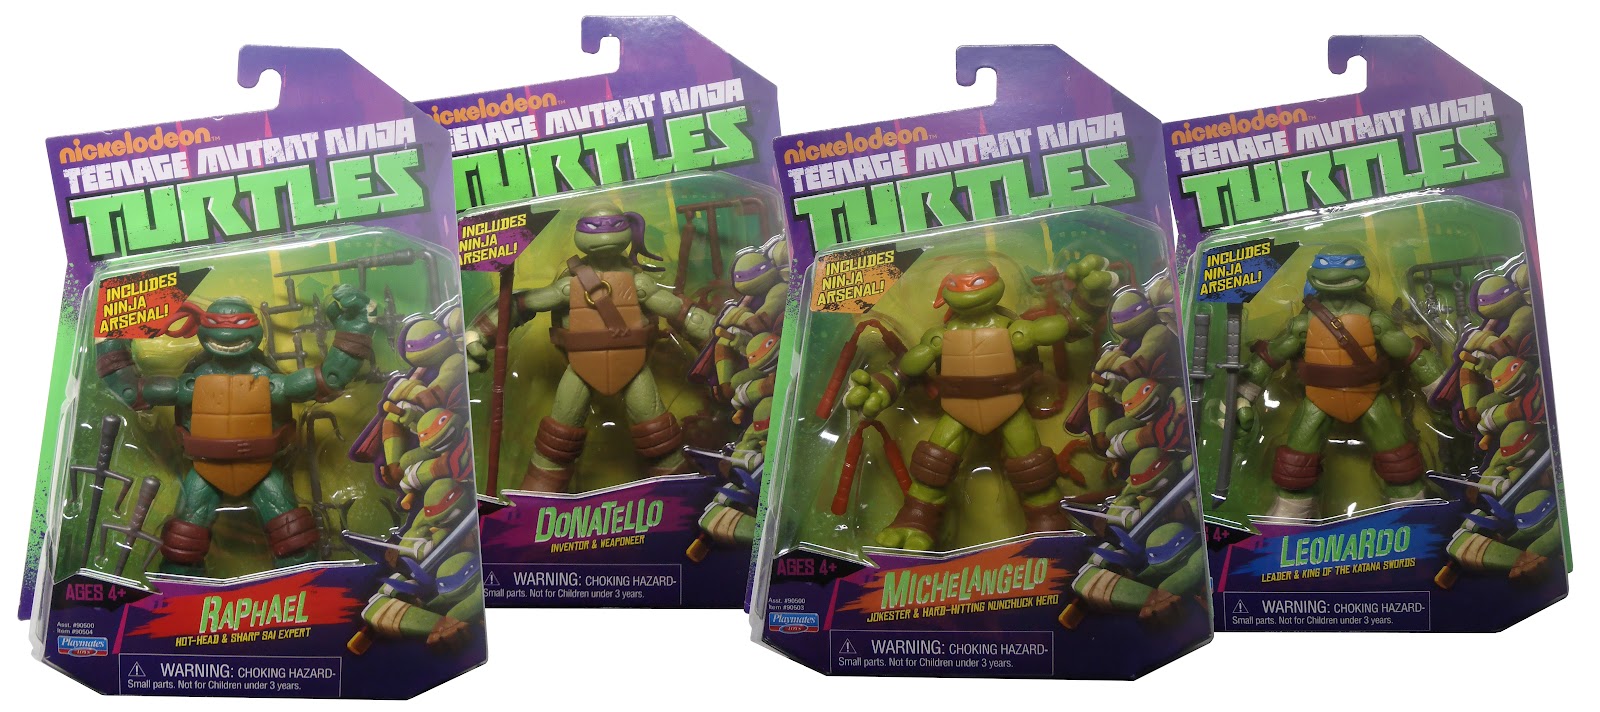 Taylor's Sweet Little Art and Nerd Site: Teenage Mutant Ninja Turtles 2012  Toy Review!